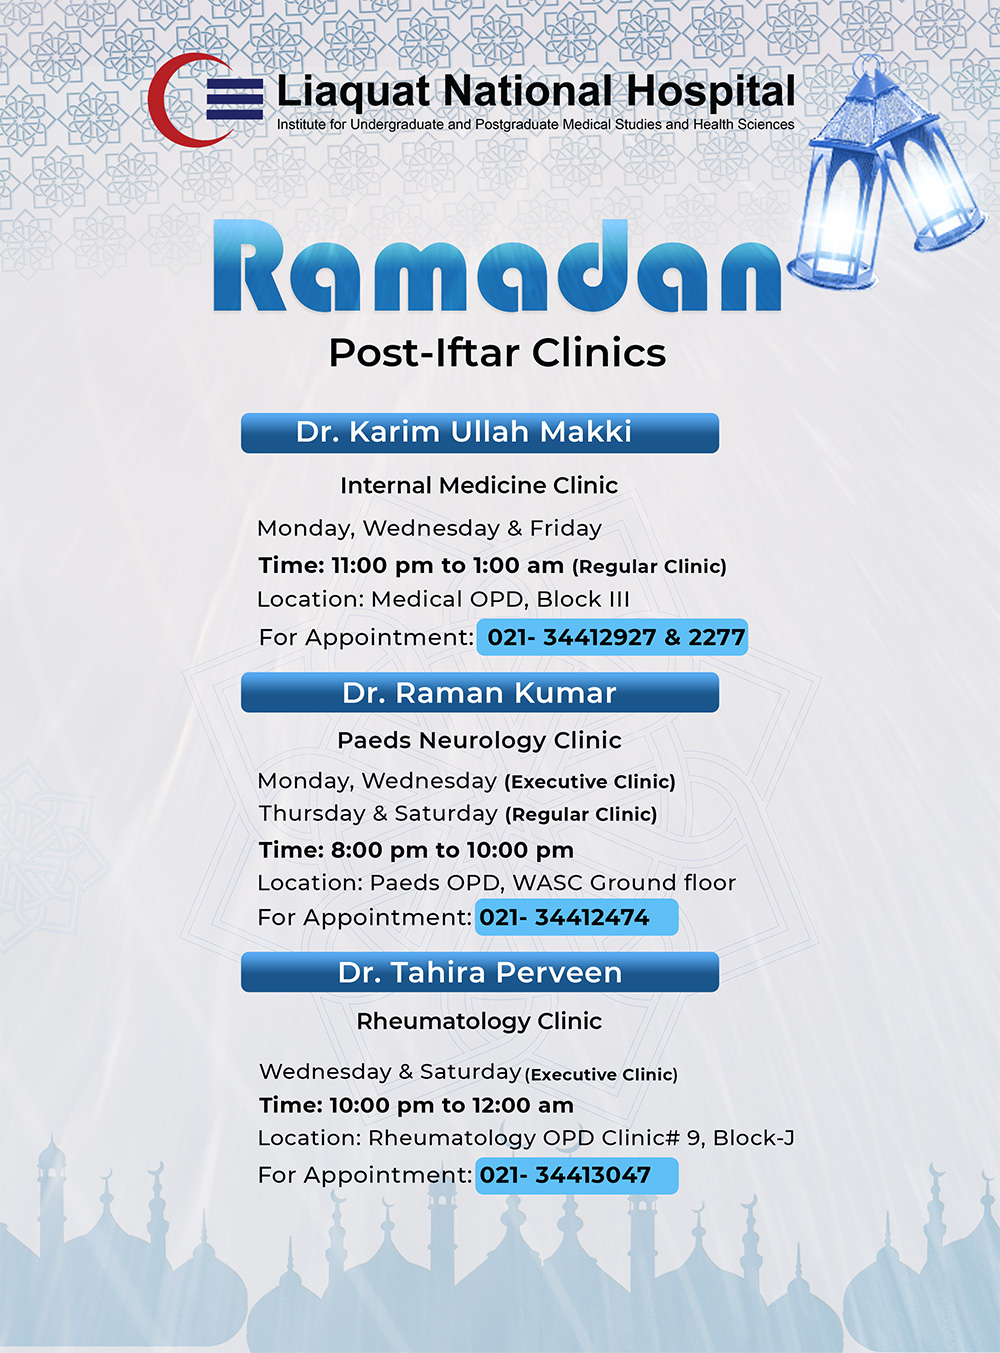 Post-Iftar Clinics in Ramadan